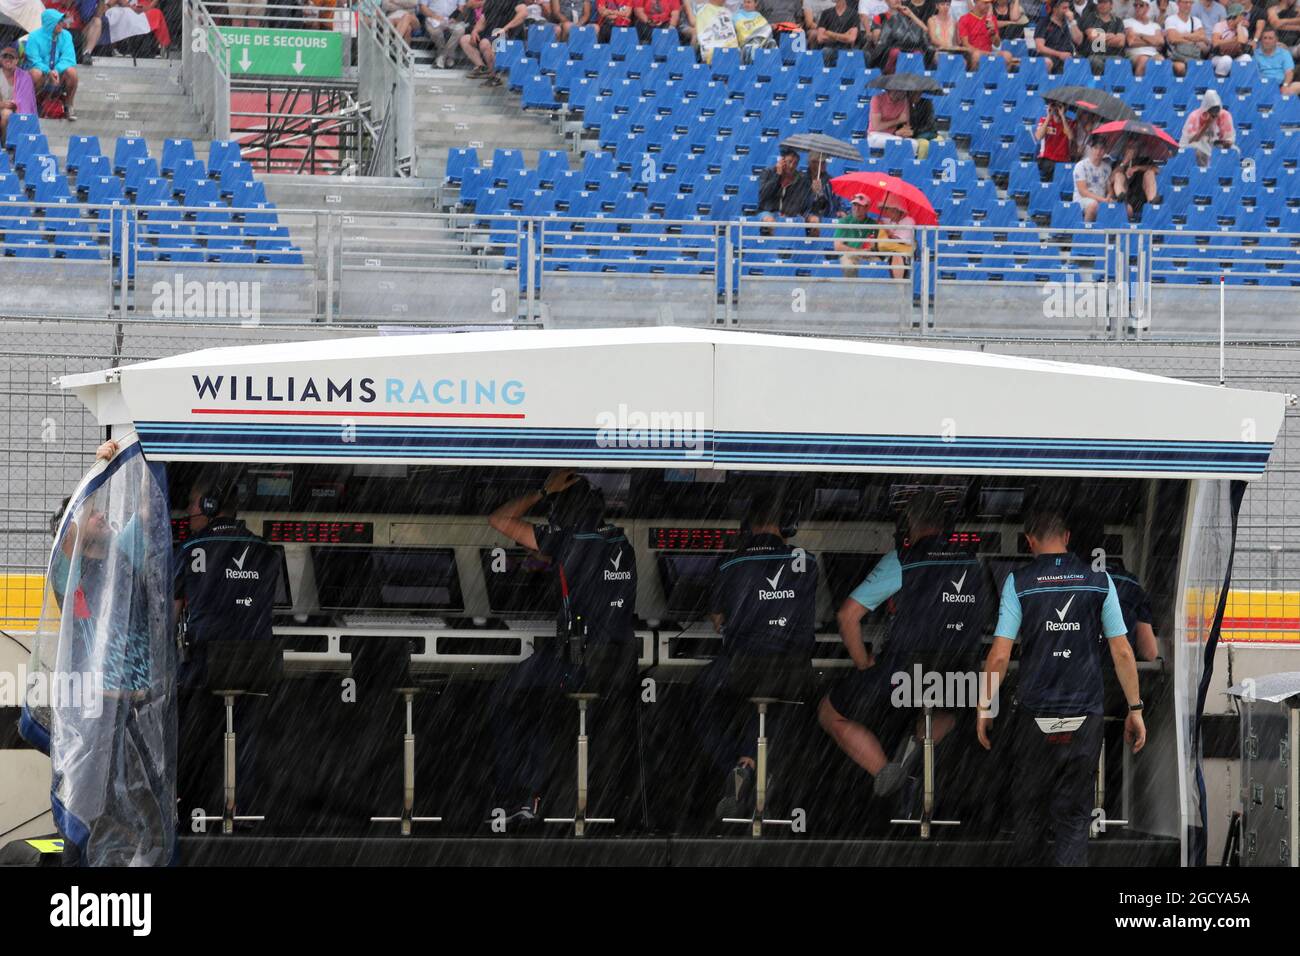 Williams pit gantry in the rain. French Grand Prix, Saturday 23rd June 2018. Paul Ricard, France. Stock Photo